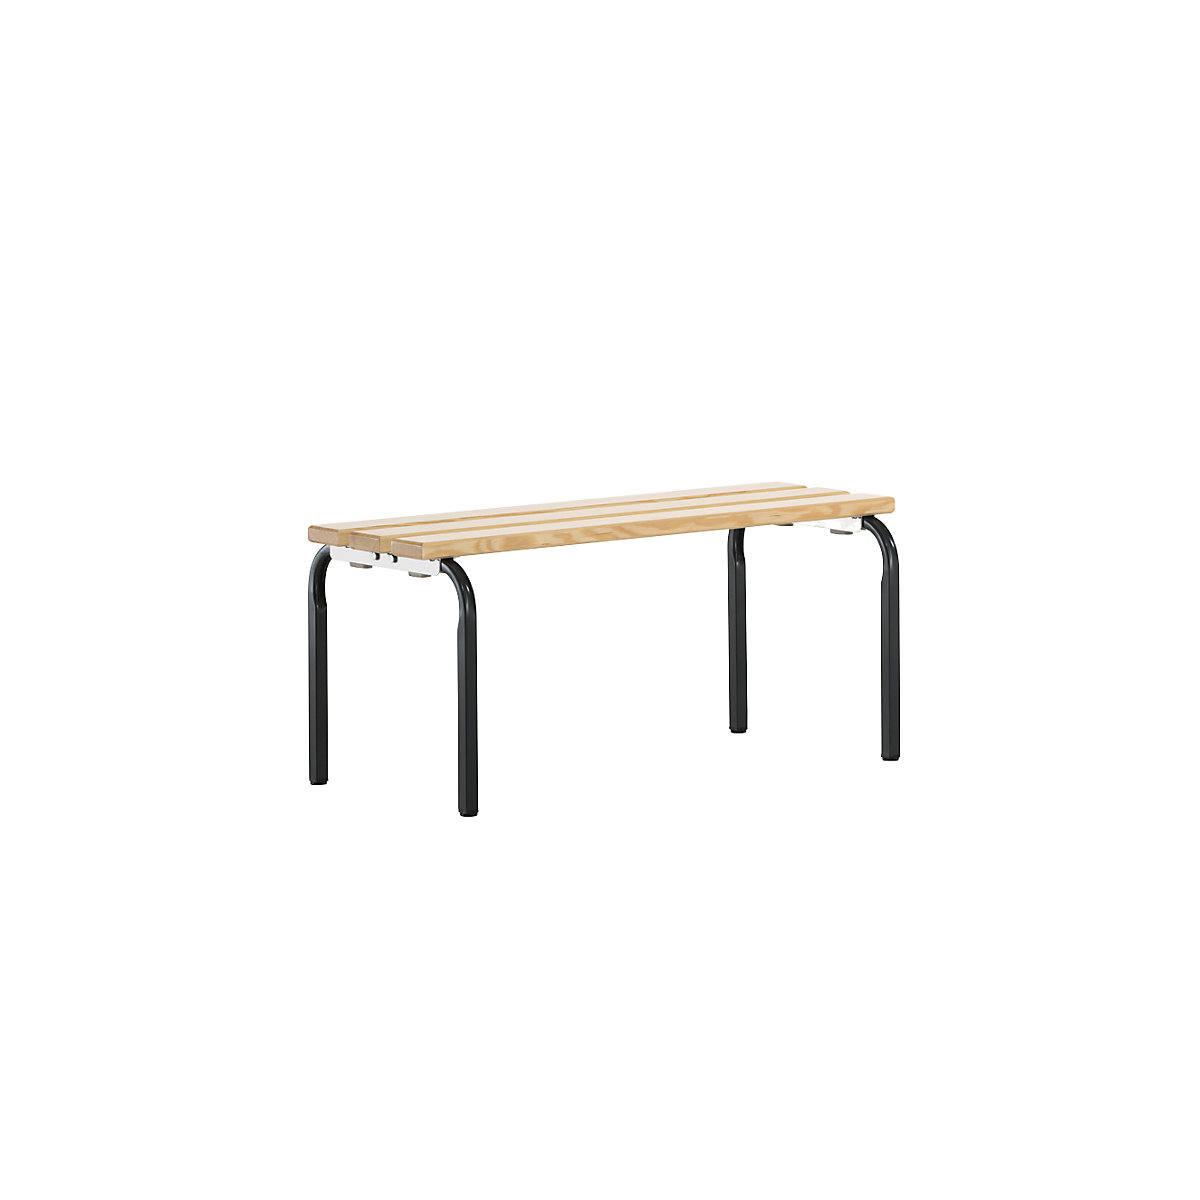 Cloakroom bench, stackable – Sypro, pine wood slats, length 1015 mm, charcoal frame-3